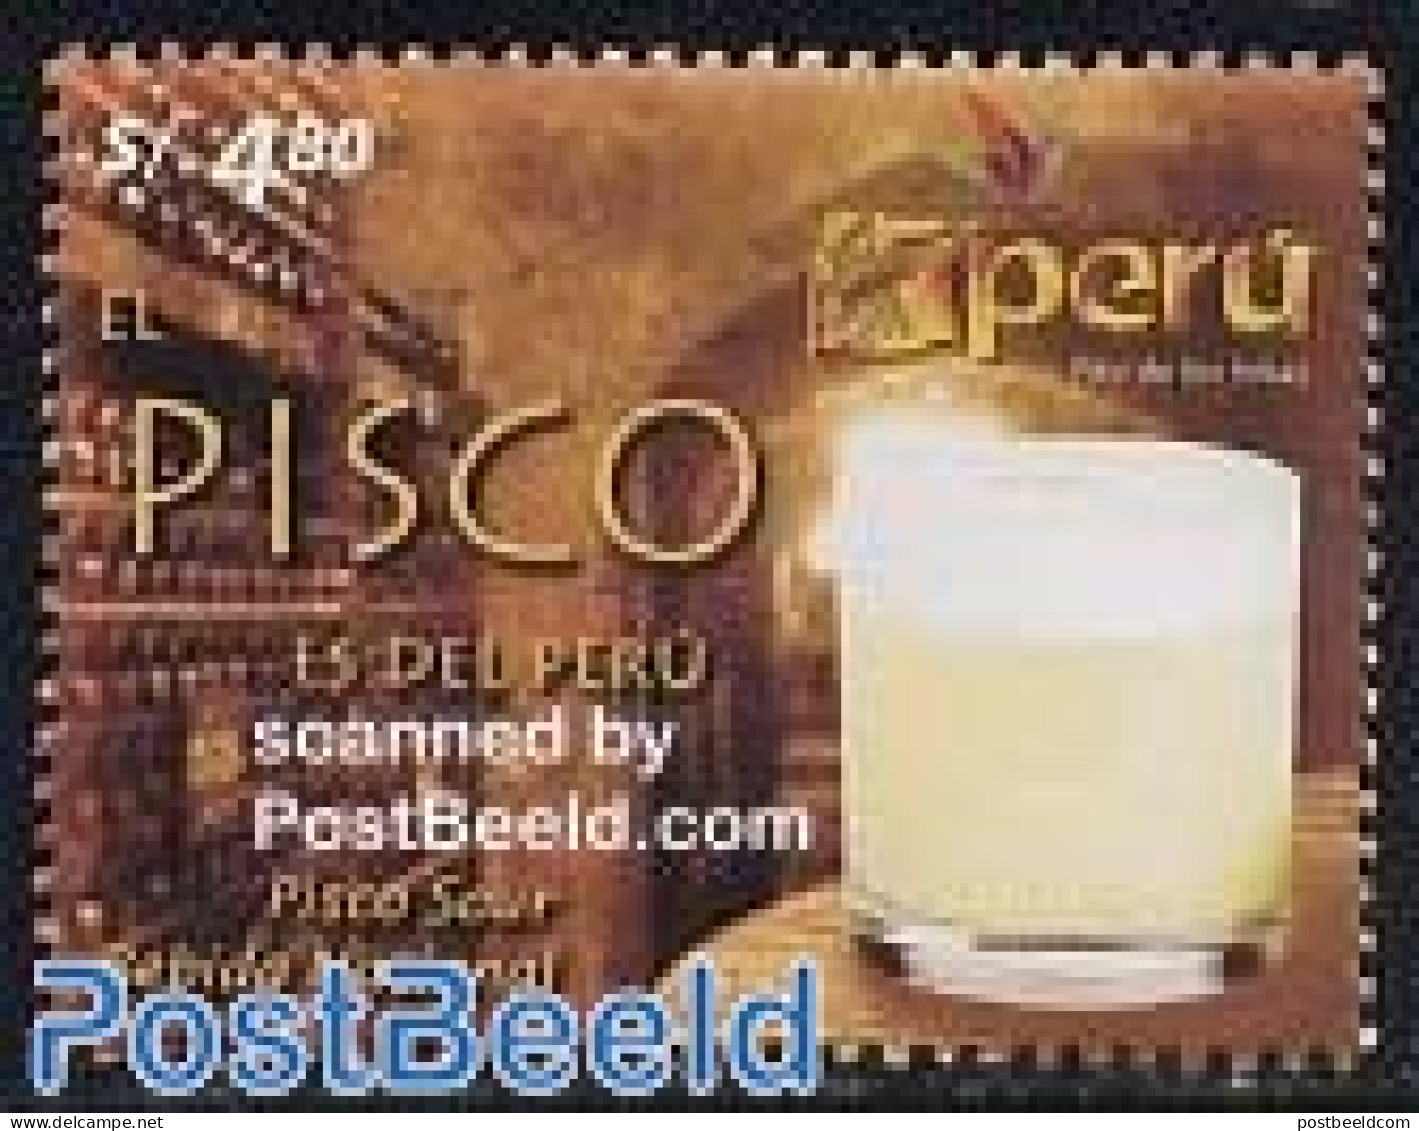 Peru 2004 Pisco Sour 1v, Mint NH, Health - Food & Drink - Food